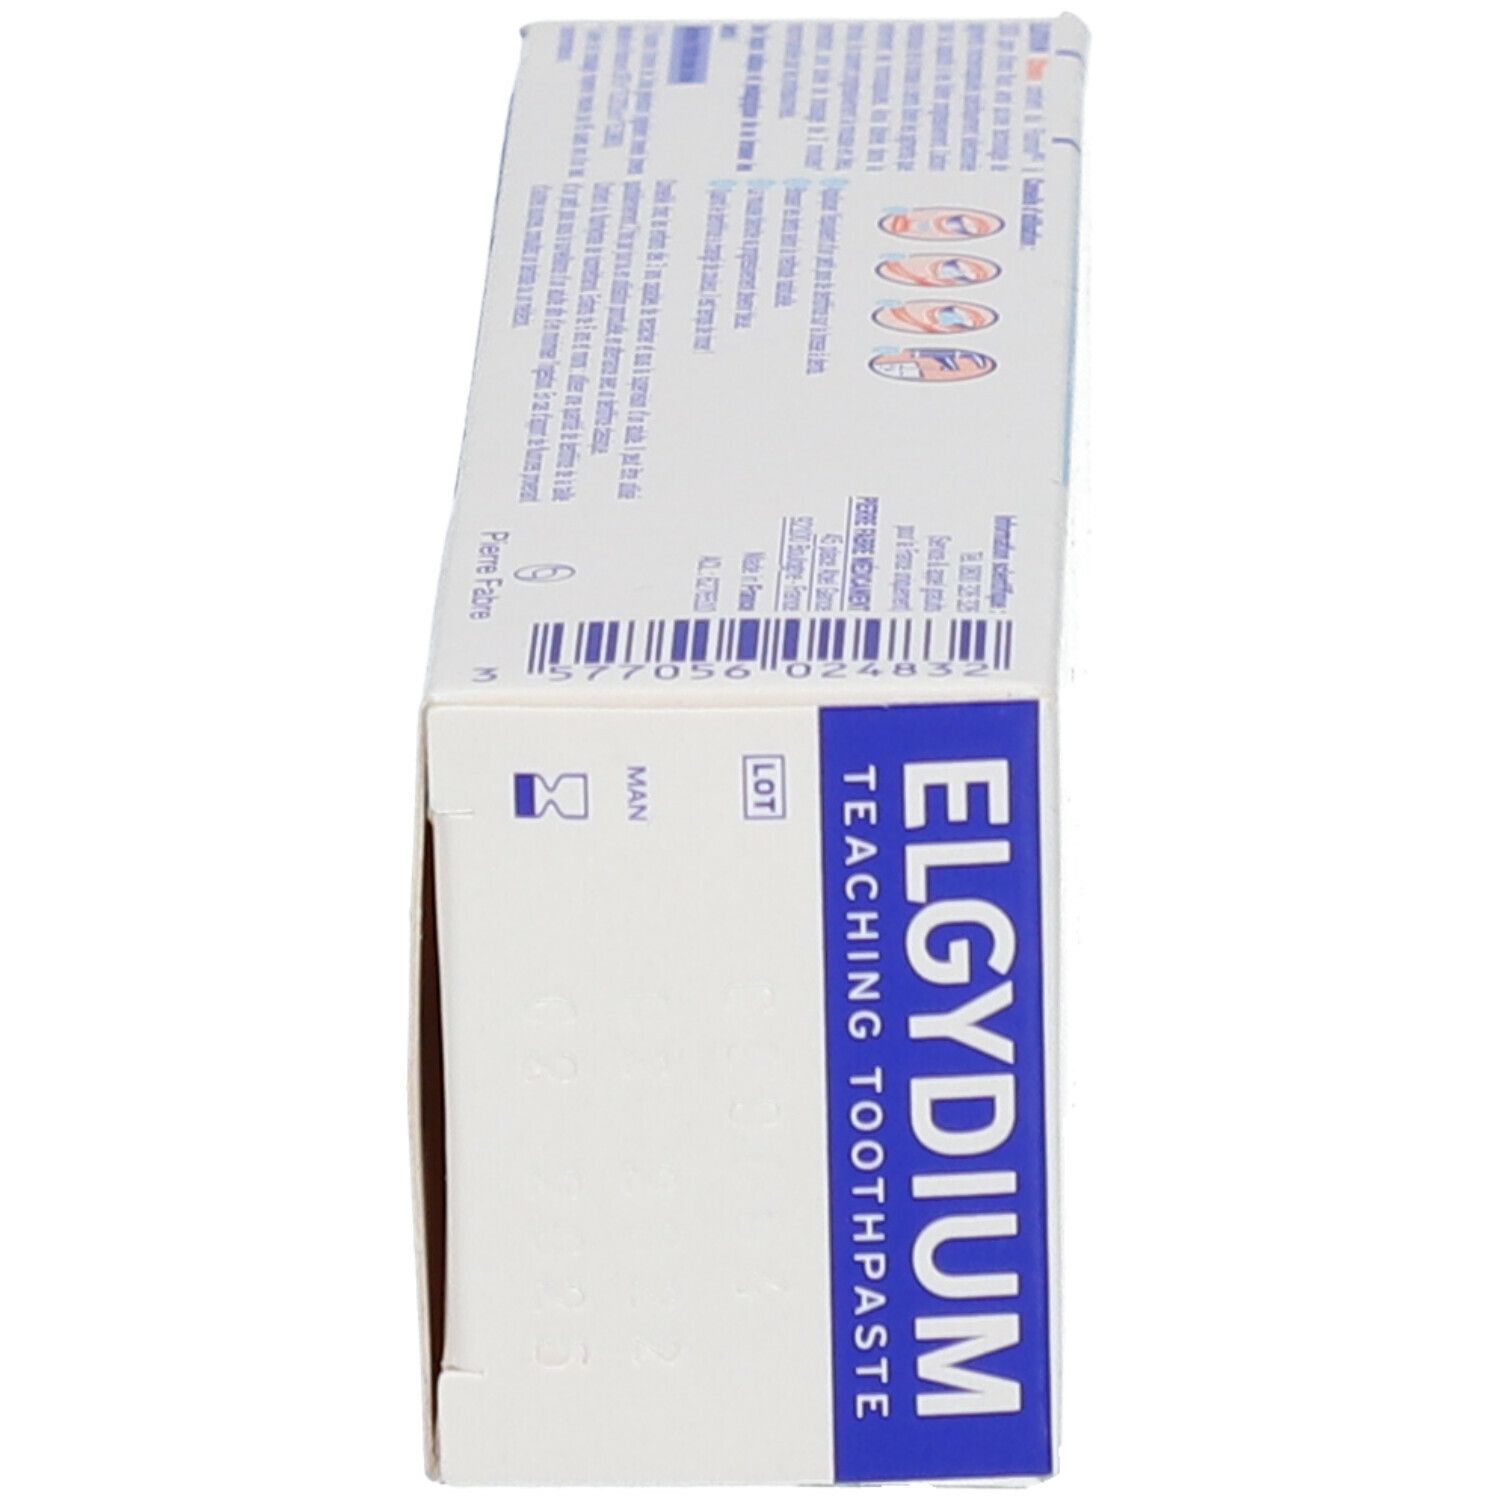 Elgydium Dentifrice Éducatif